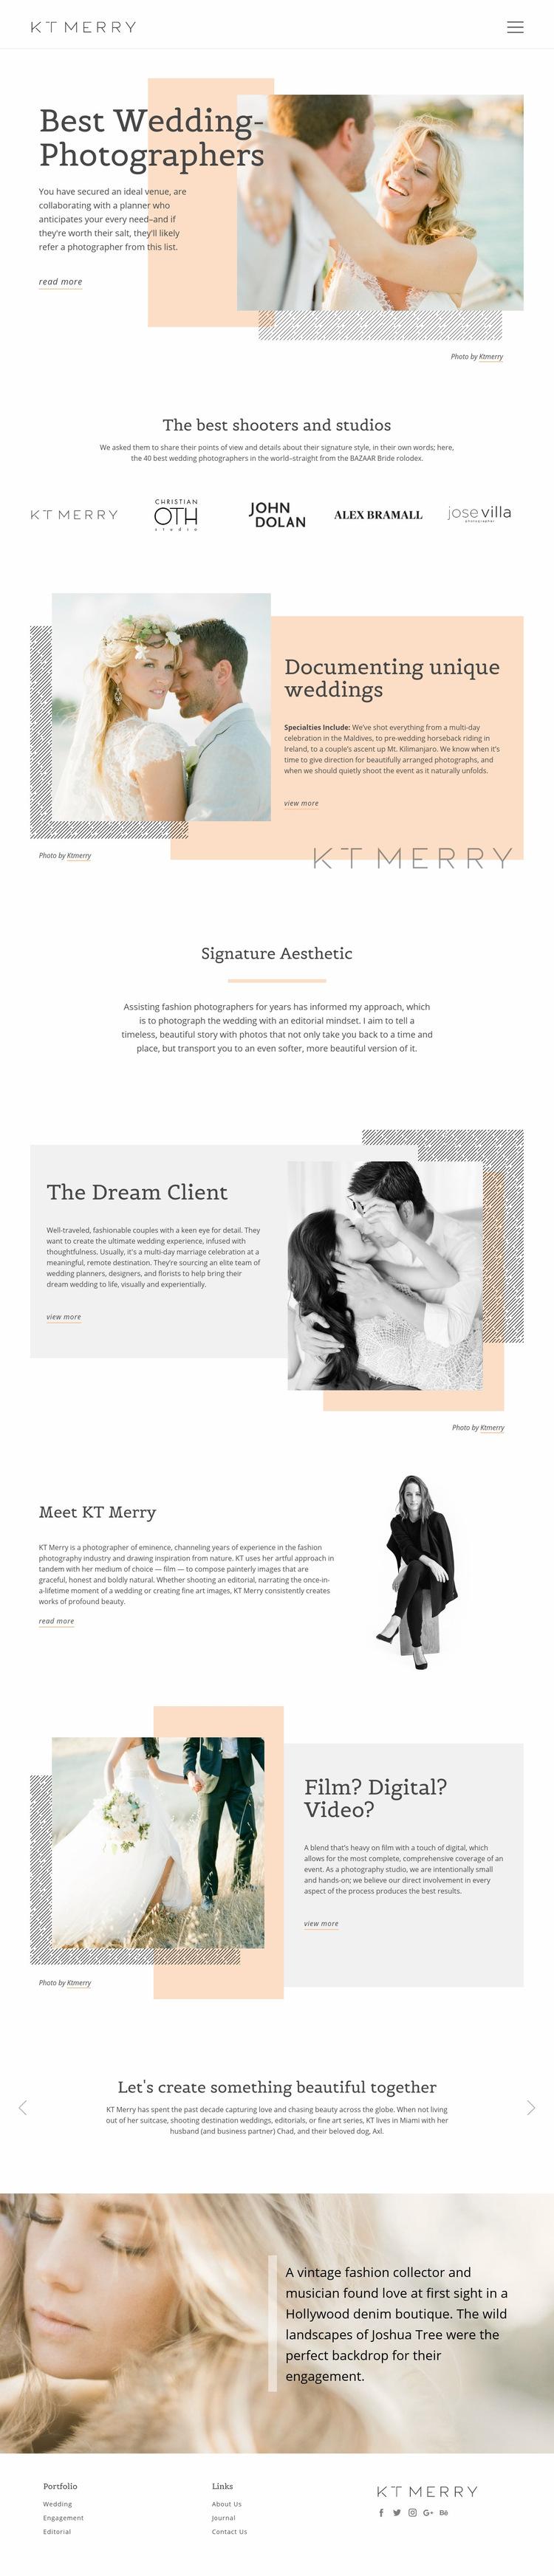 Wedding Photographers Web Page Design